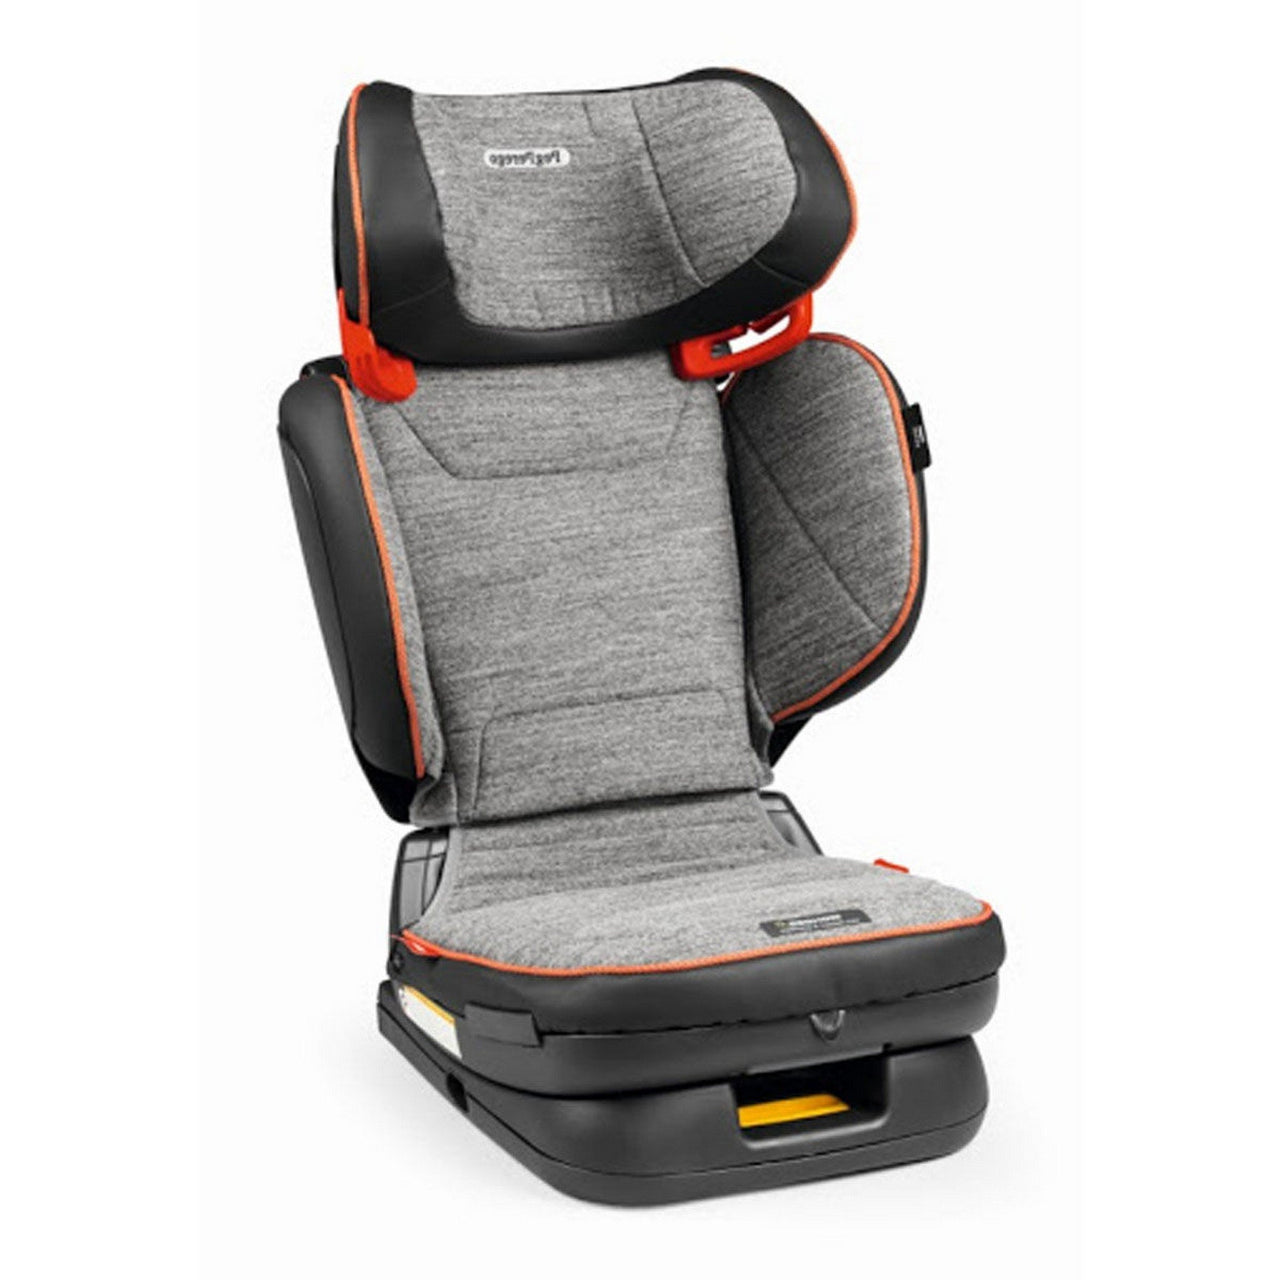 Peg Perego Viaggio Flex 120 Booster Seat Review